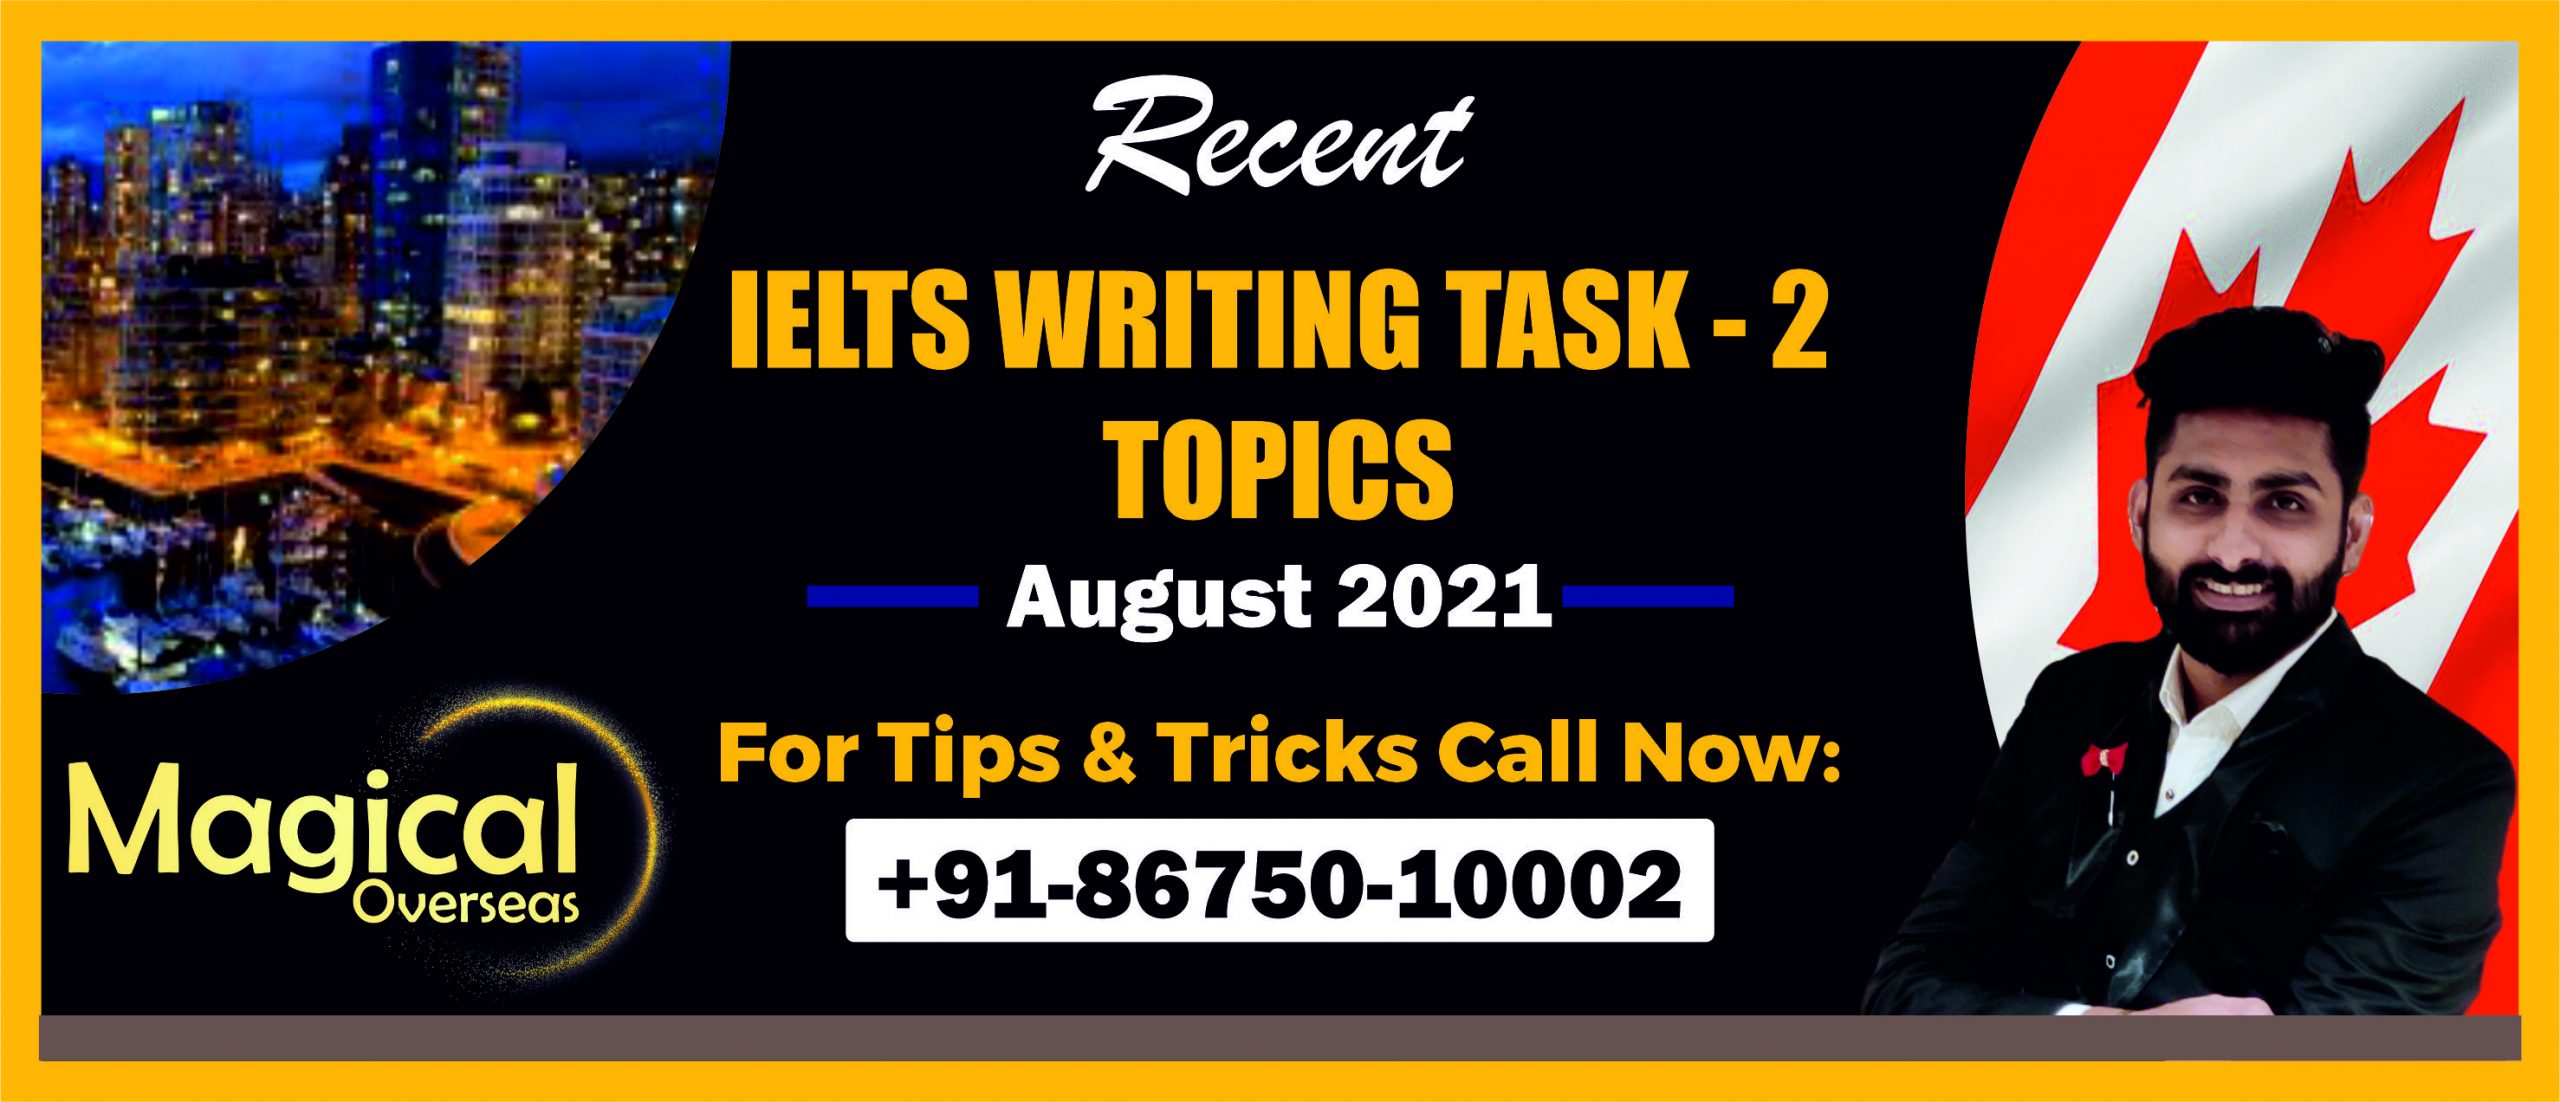 Writing Task 2 Topics August 2021